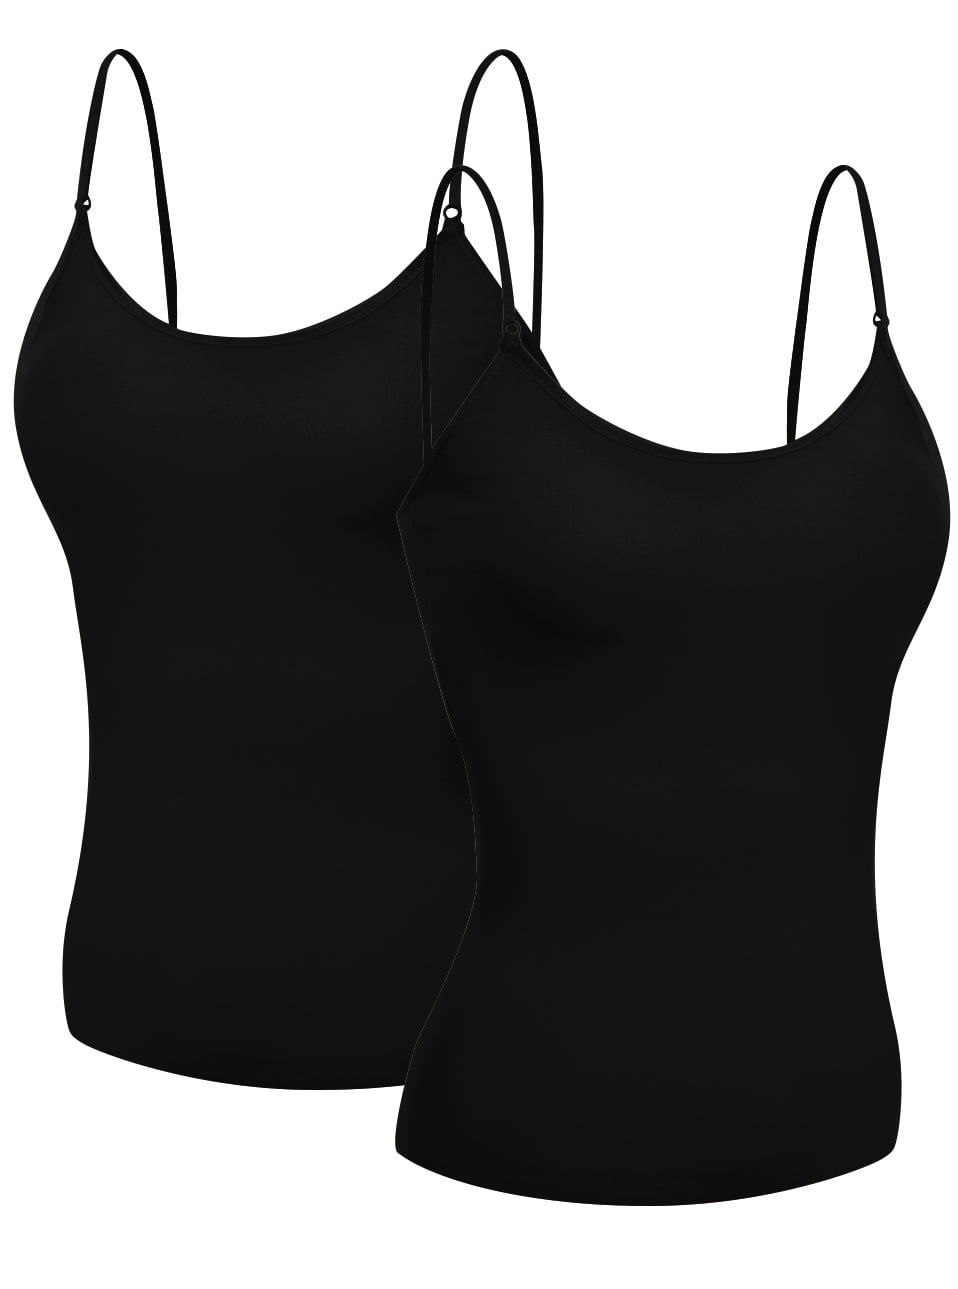 Buy Women's Cami Shaper Tank Top with Built in Bra Removable 2 Packs  (Black,Khaki, Medium) at